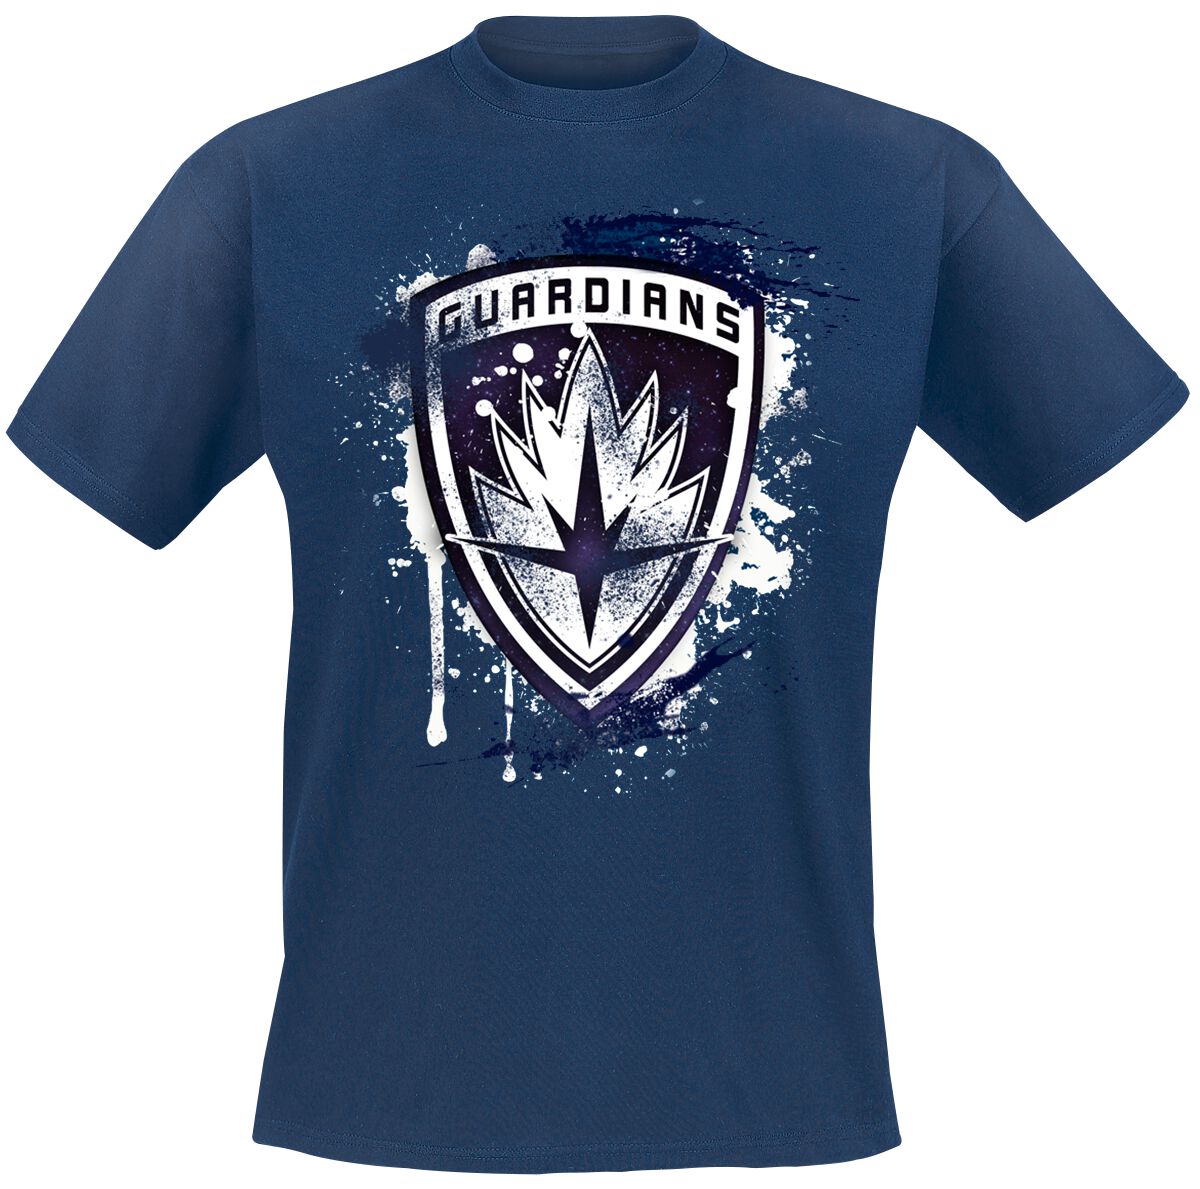 Guardians Of The Galaxy Logo T-Shirt navy